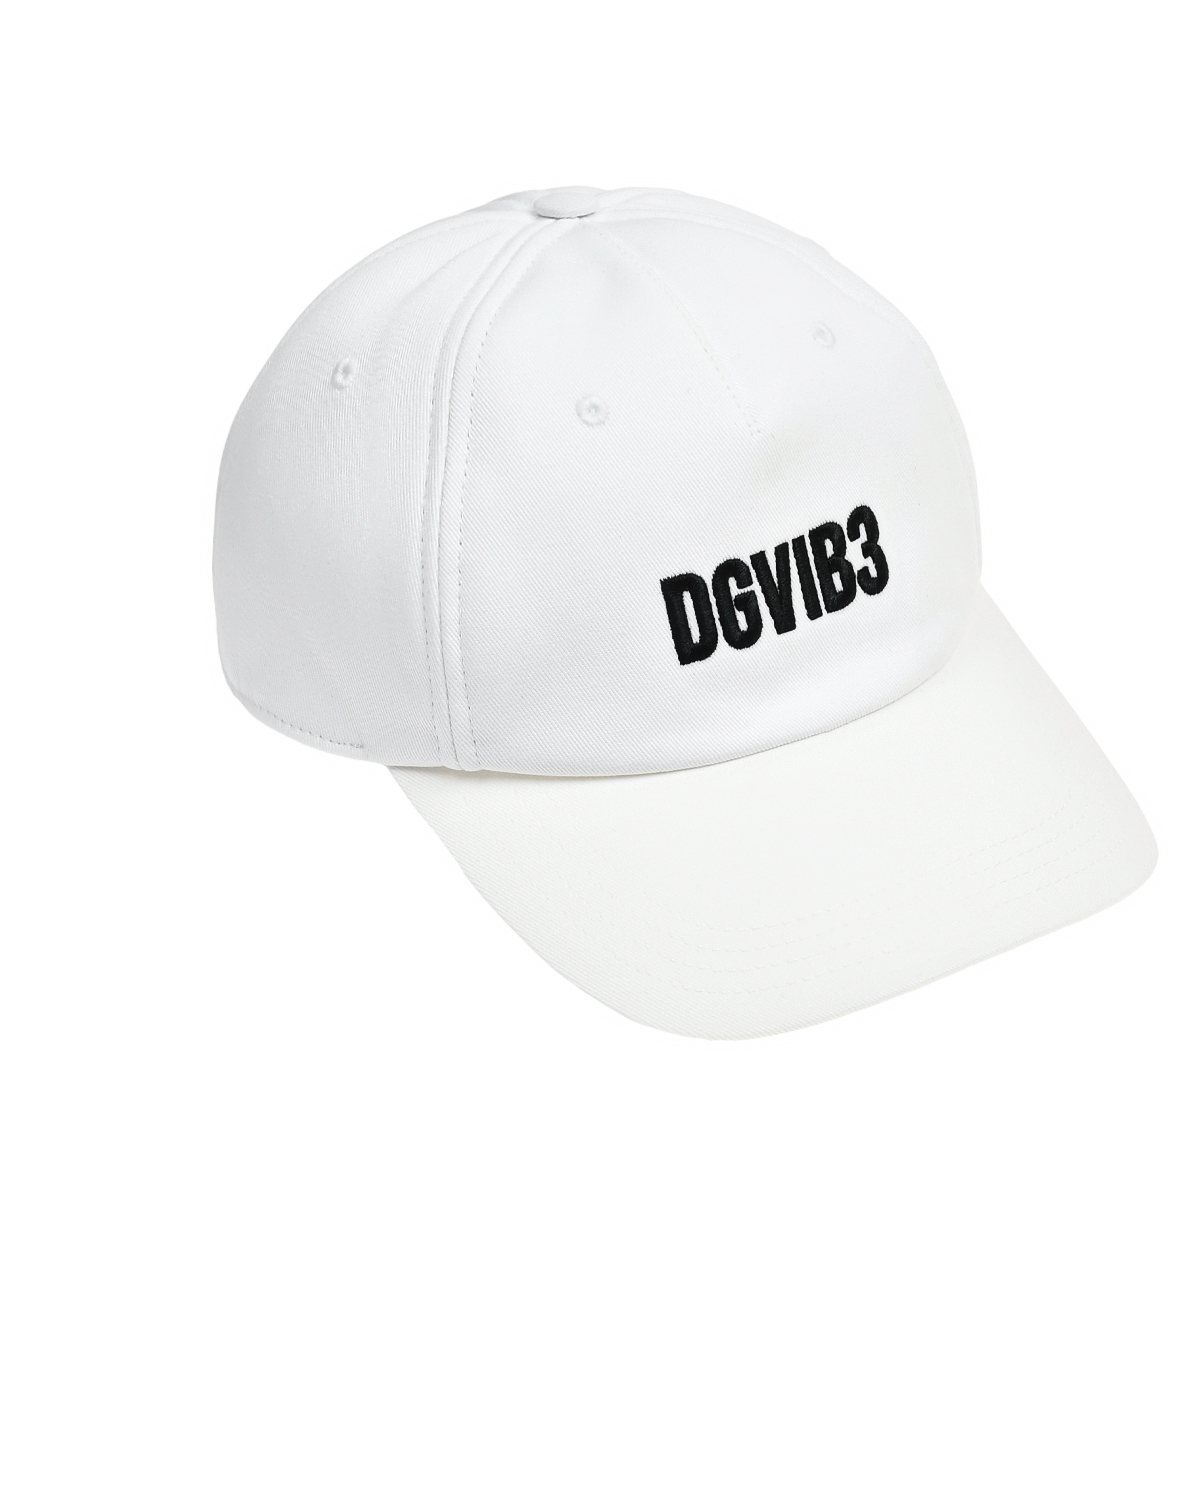 Бейсболка с вышивкой DGVIB3, белая Dolce&Gabbana, размер M, цвет белый